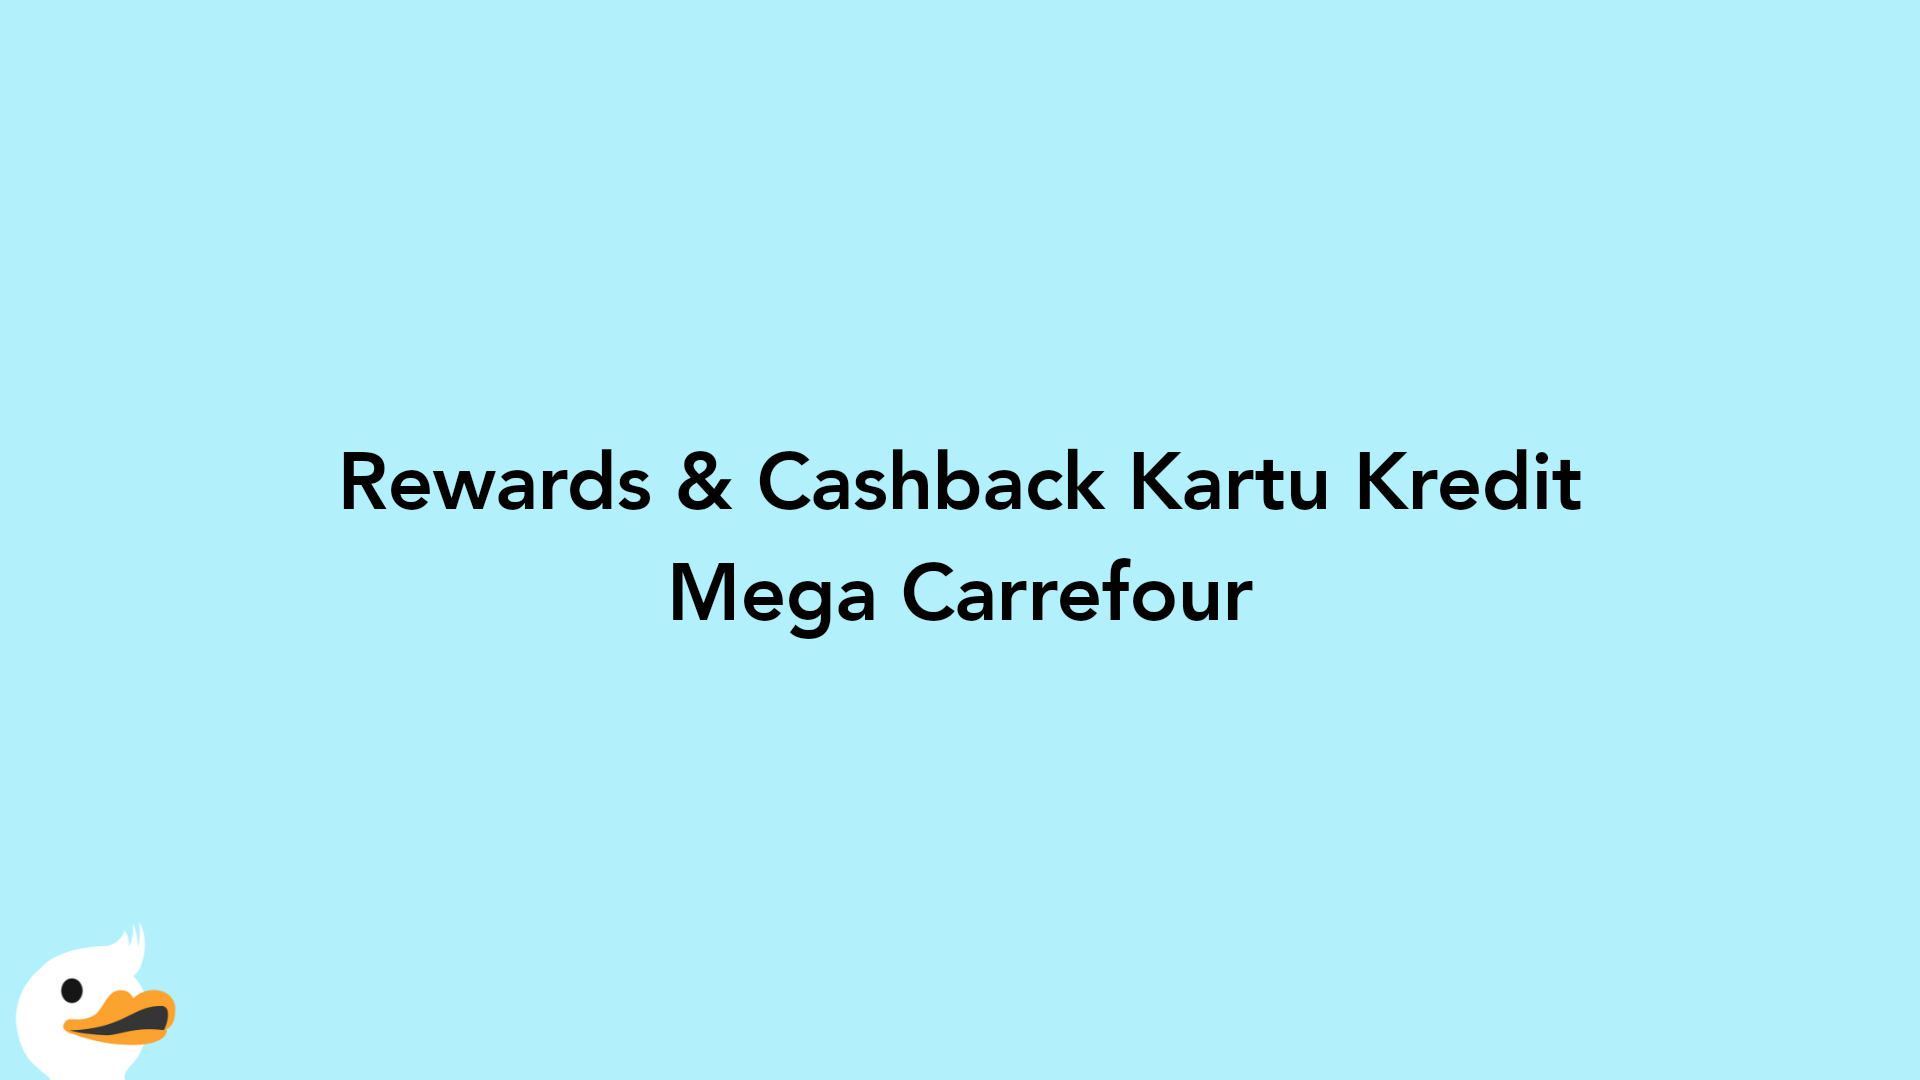 Rewards & Cashback Kartu Kredit Mega Carrefour